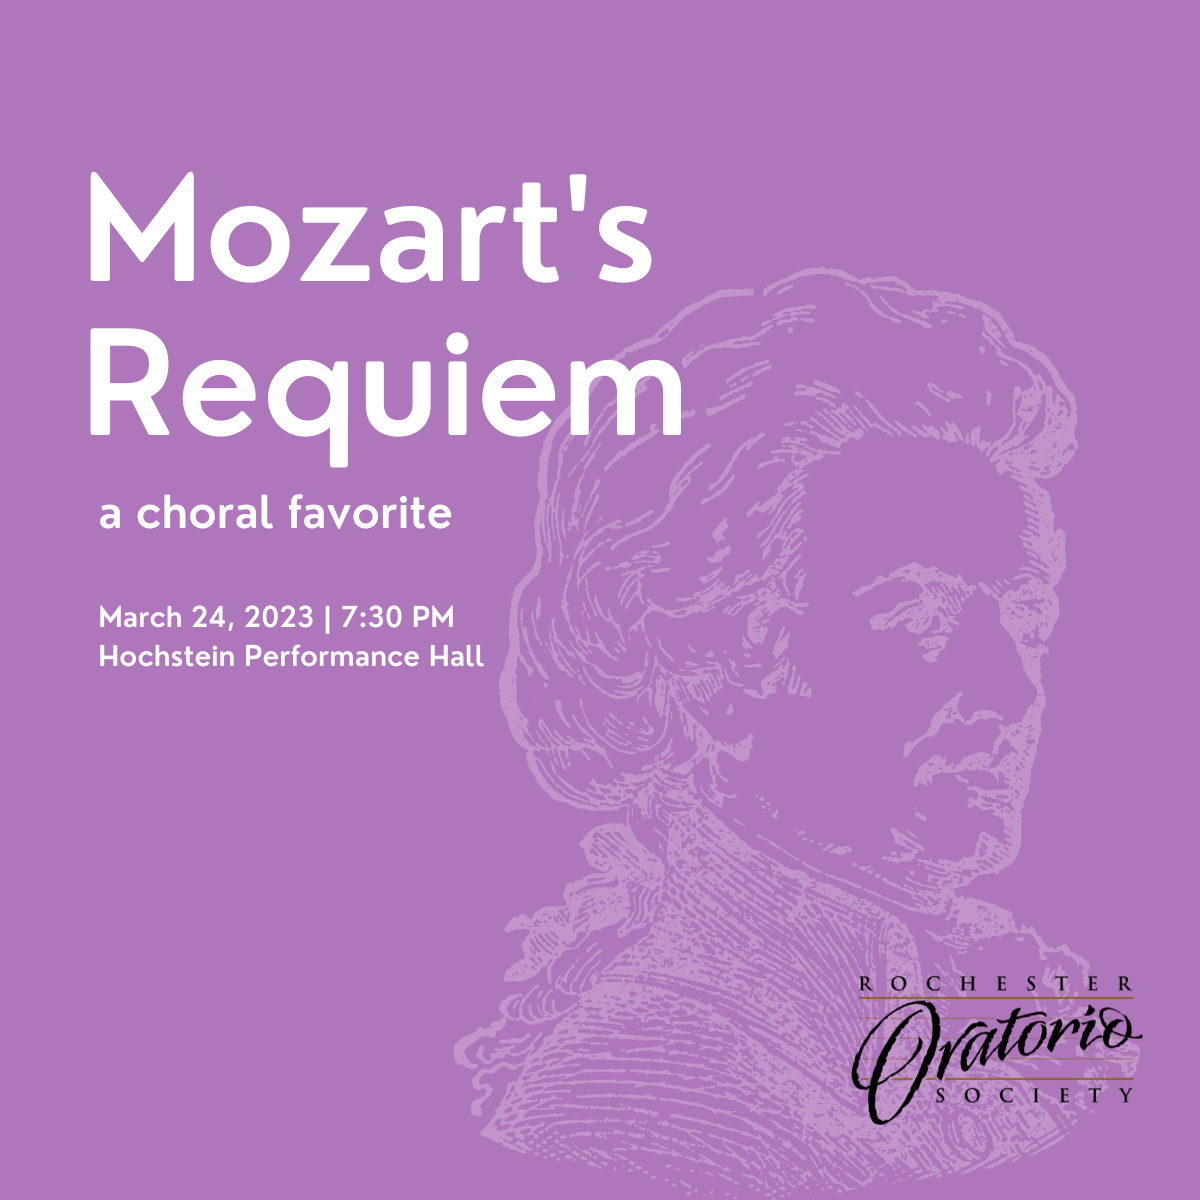 Mozart's Requiem, a choral favorite, March 14, 2023, 7:30 PM, Hochstein Performance Hall, image of Mozart